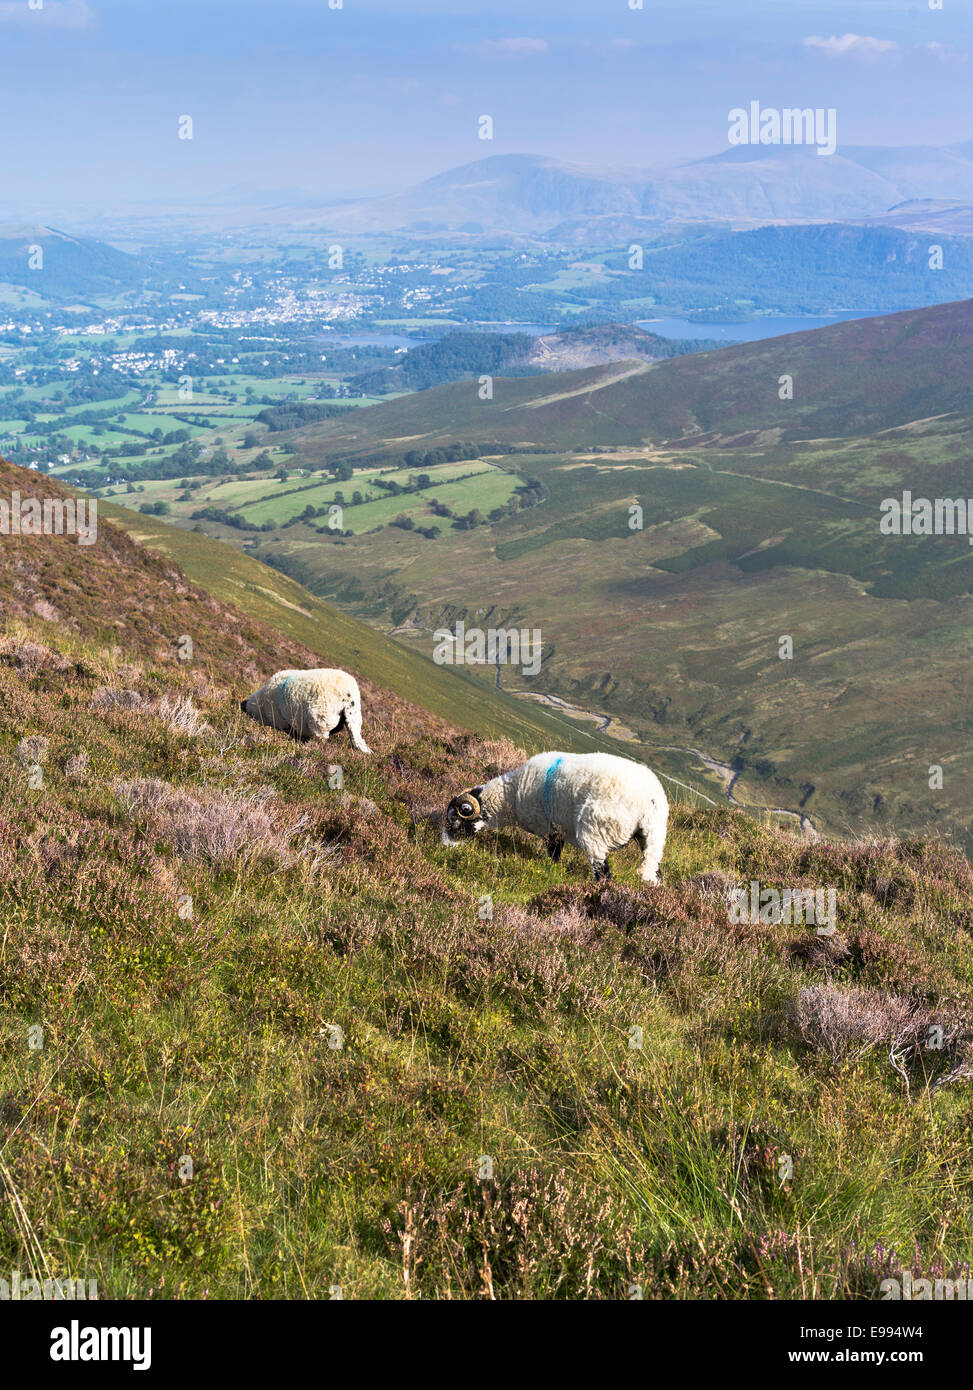 dh Lakeland Fells GRISEDALE PIKE LAKE DISTRICT Swaledale Hill Sheep Cumbria paesaggio pascolo erica collina inghilterra Foto Stock